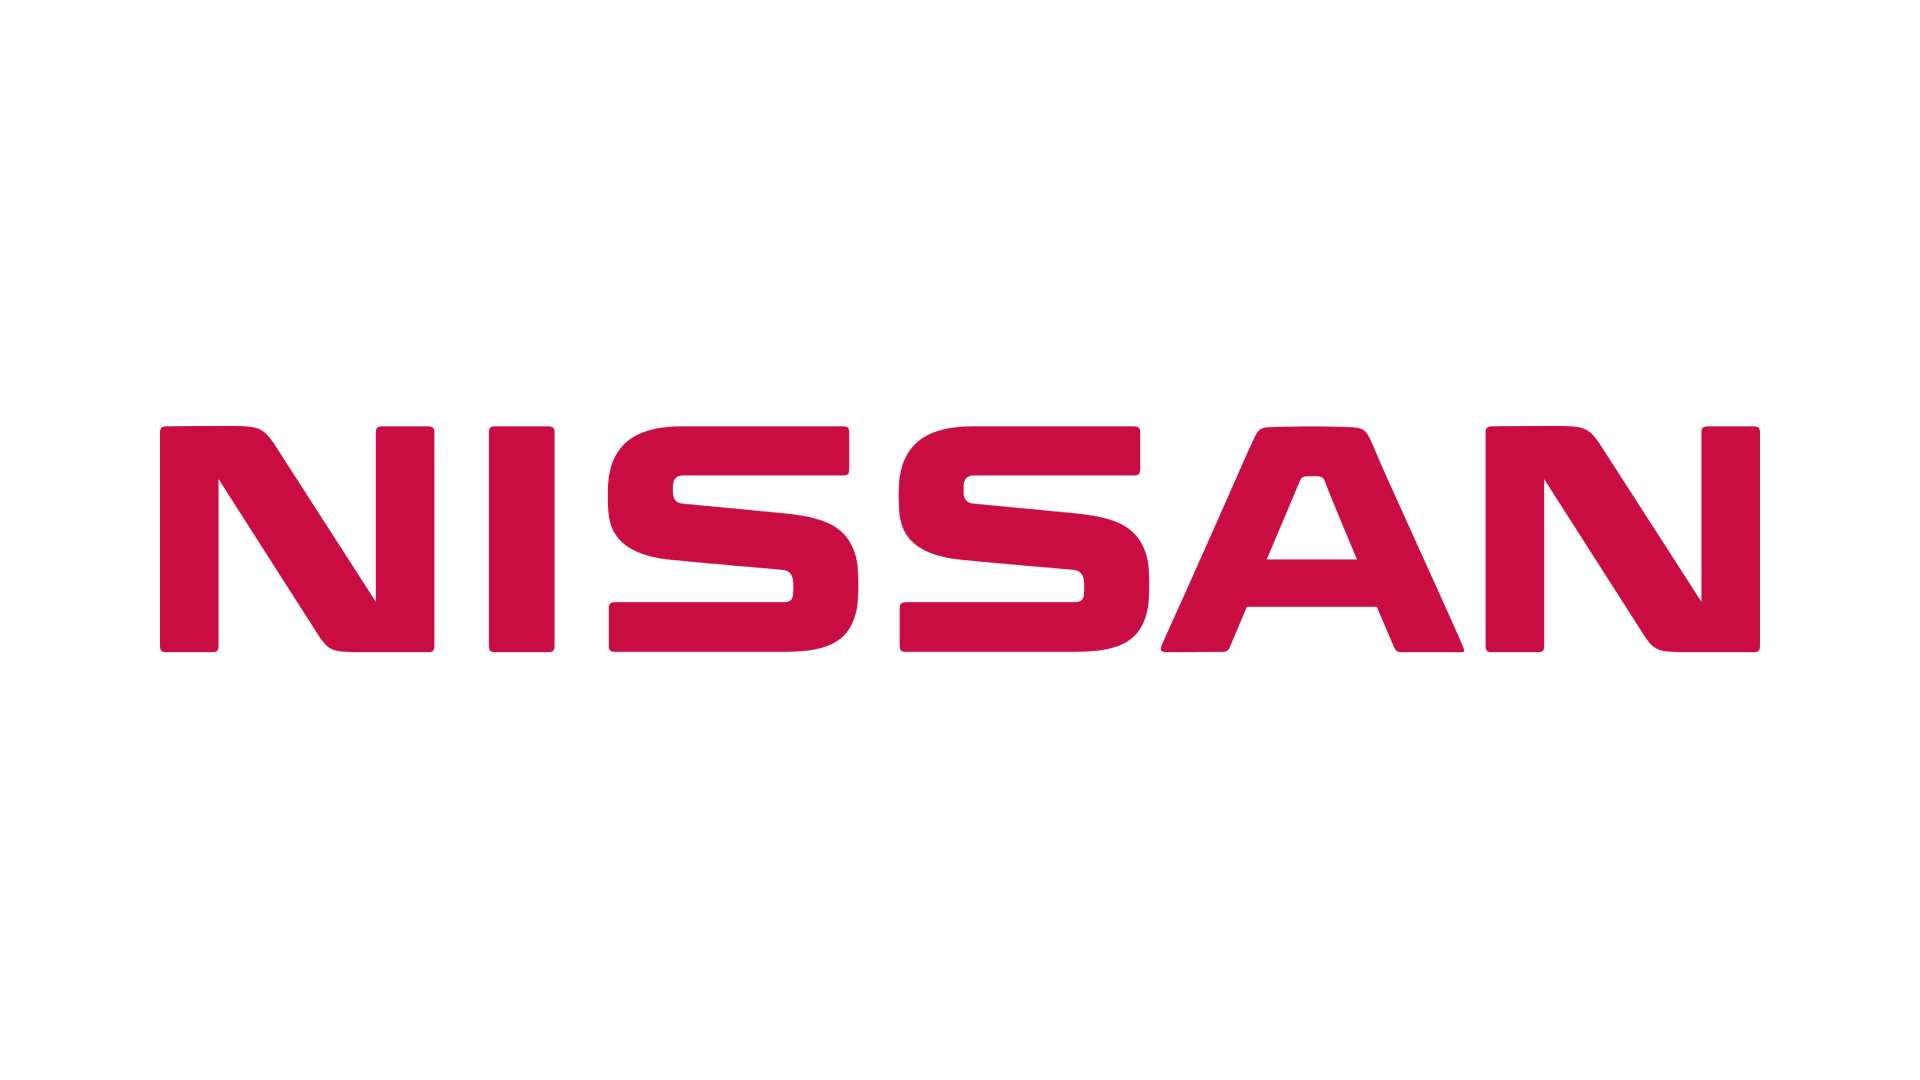 Nissan Logo Nissan Logo Nissa